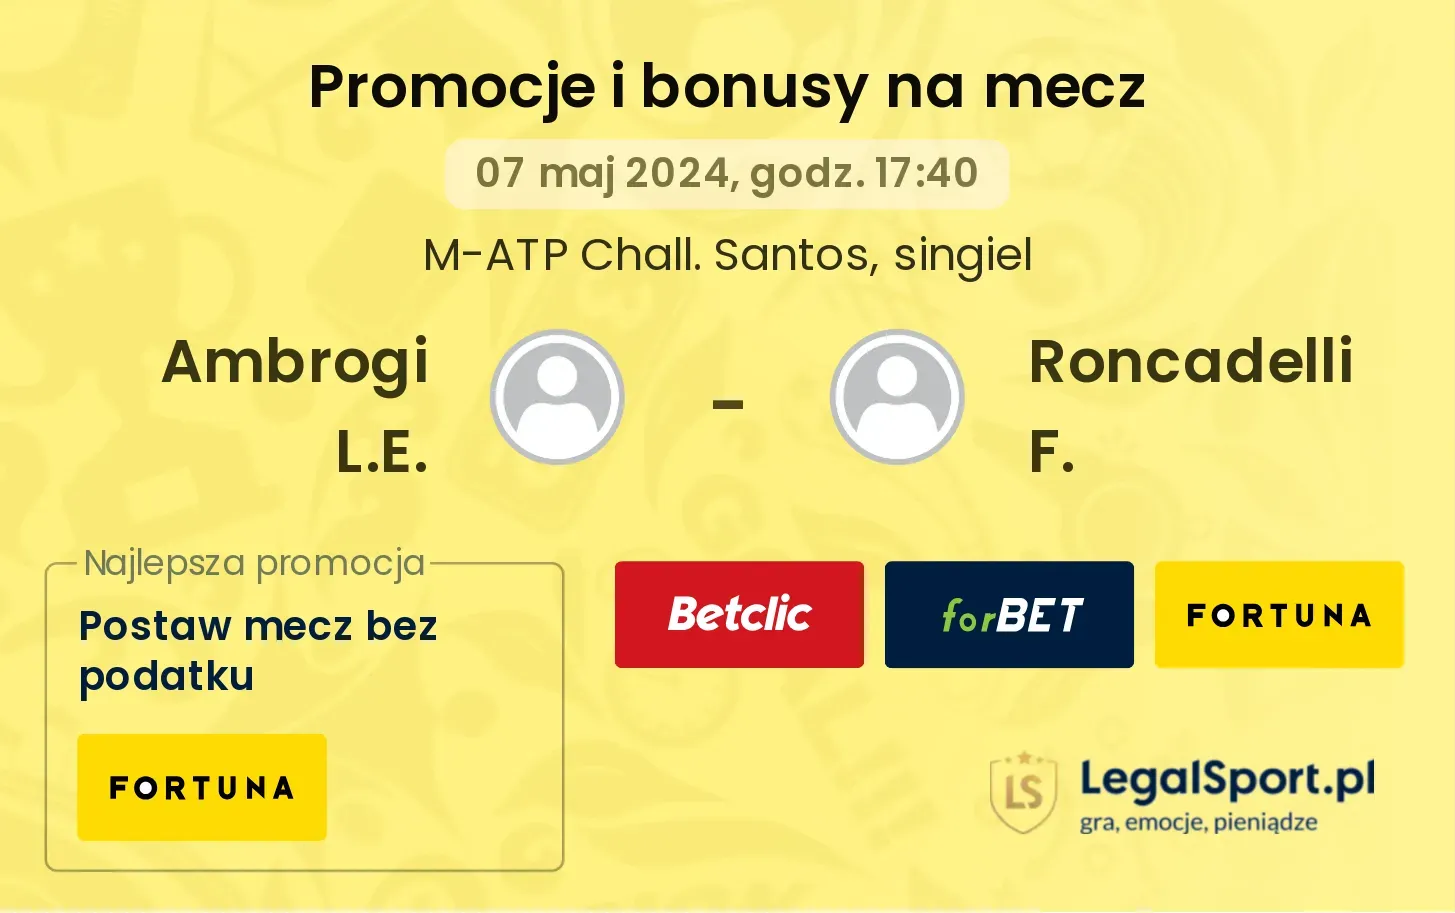 Ambrogi L.E. - Roncadelli F. promocje bonusy na mecz